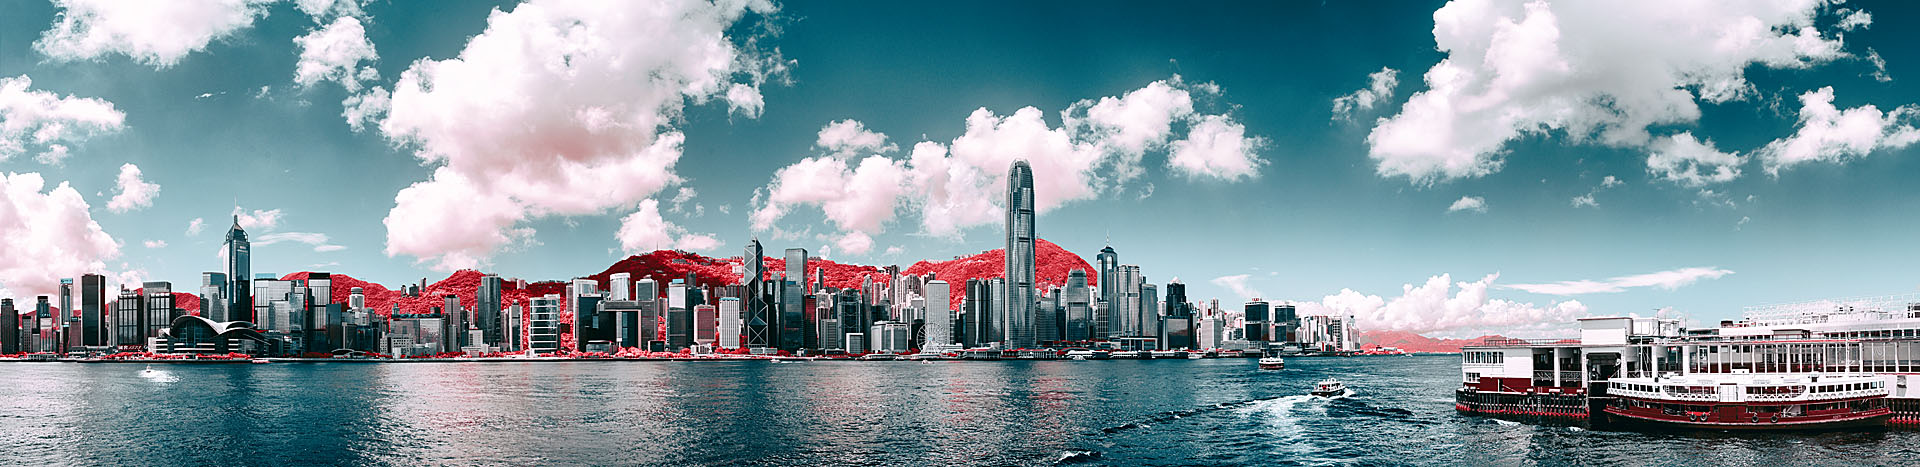 Hong Kong Island Skyline e9d686be 2050 4dc8 8820 5b1cf57e2341